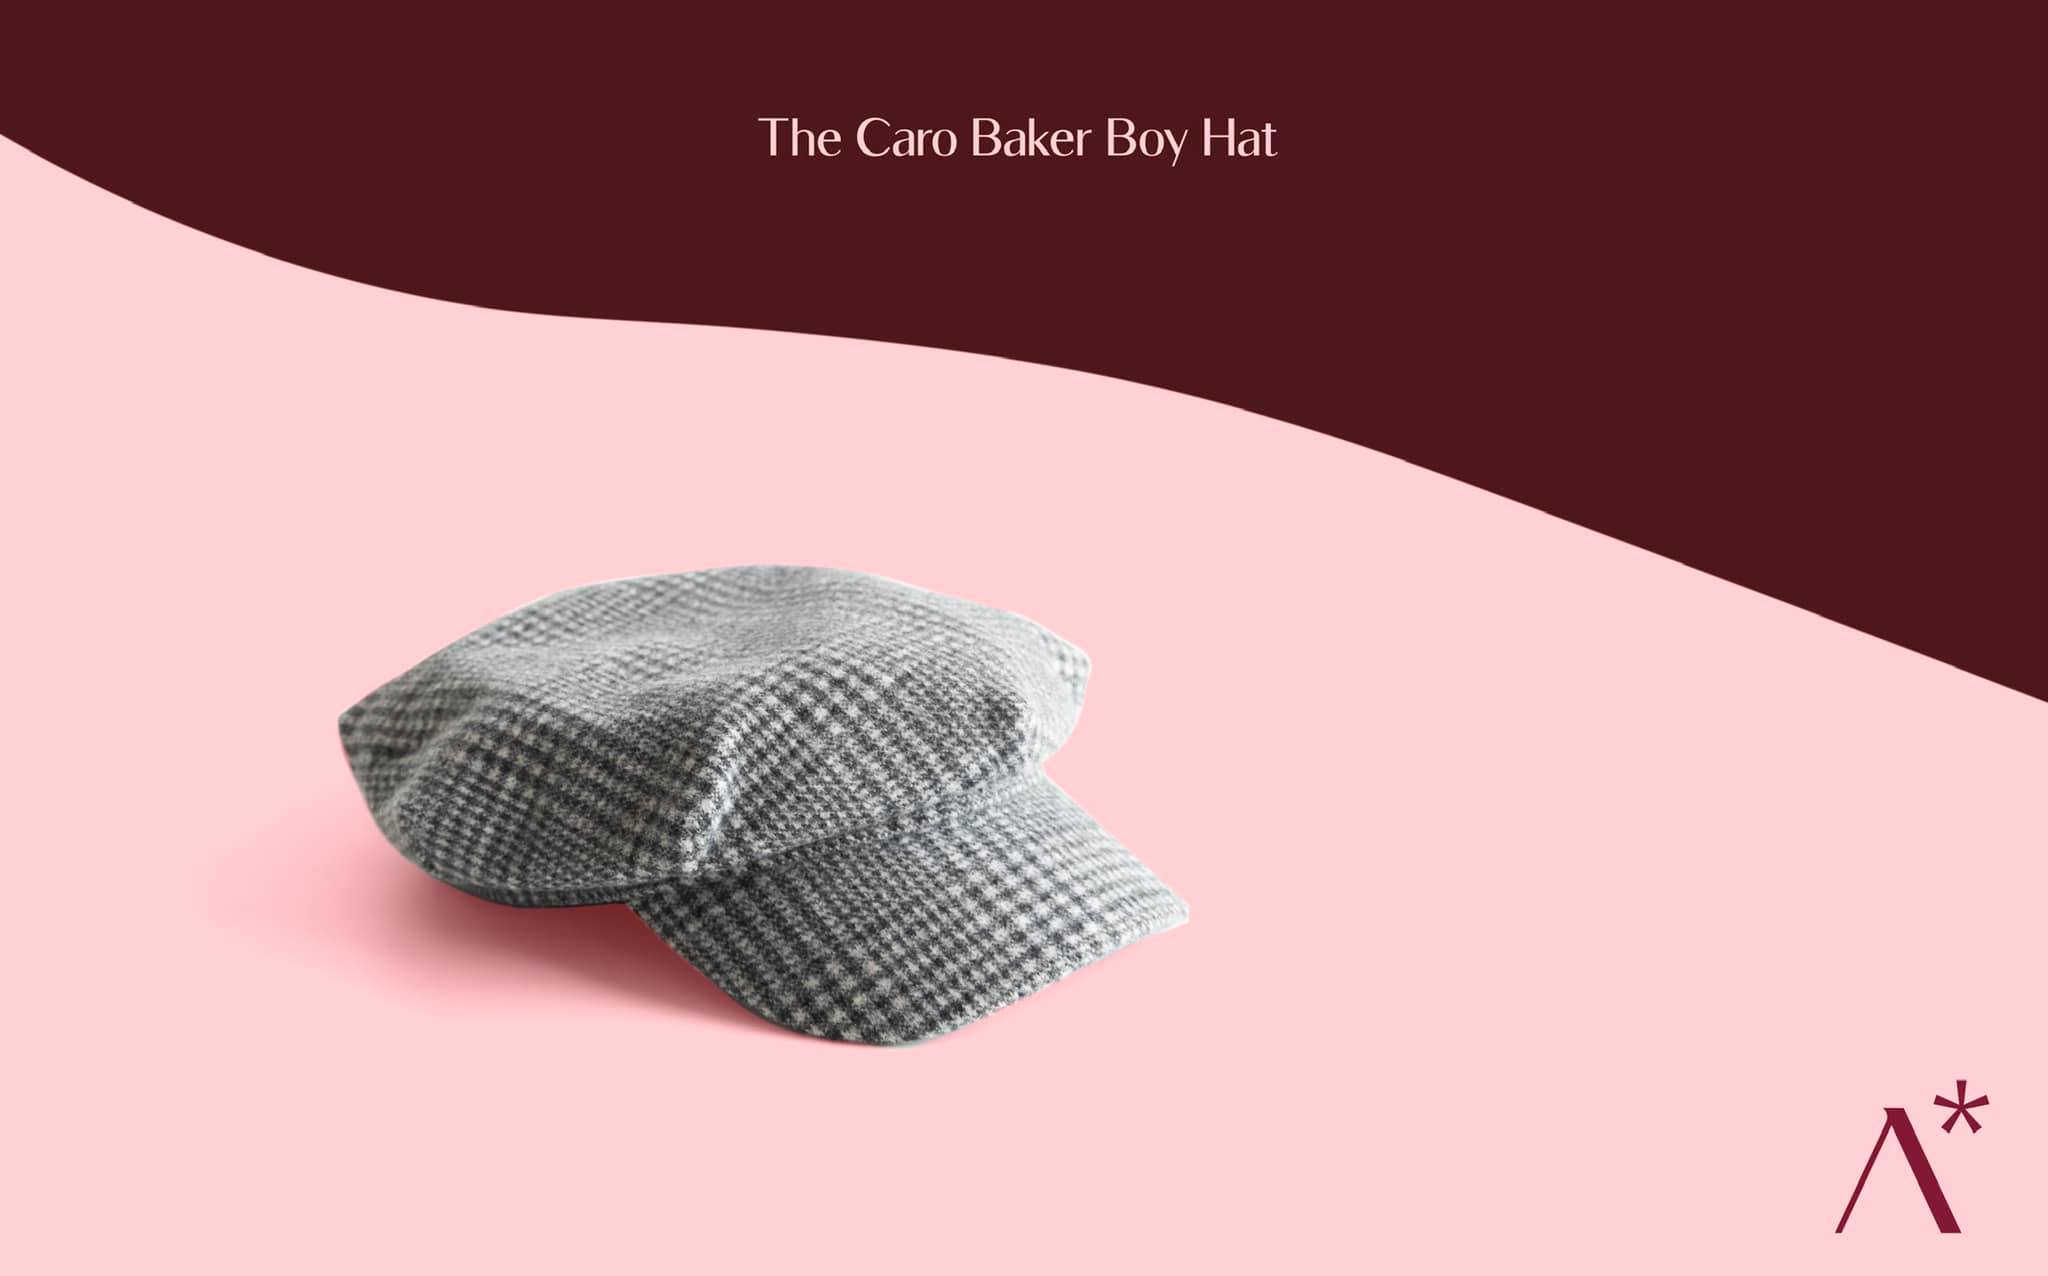 The Caro Baker Boy Hat